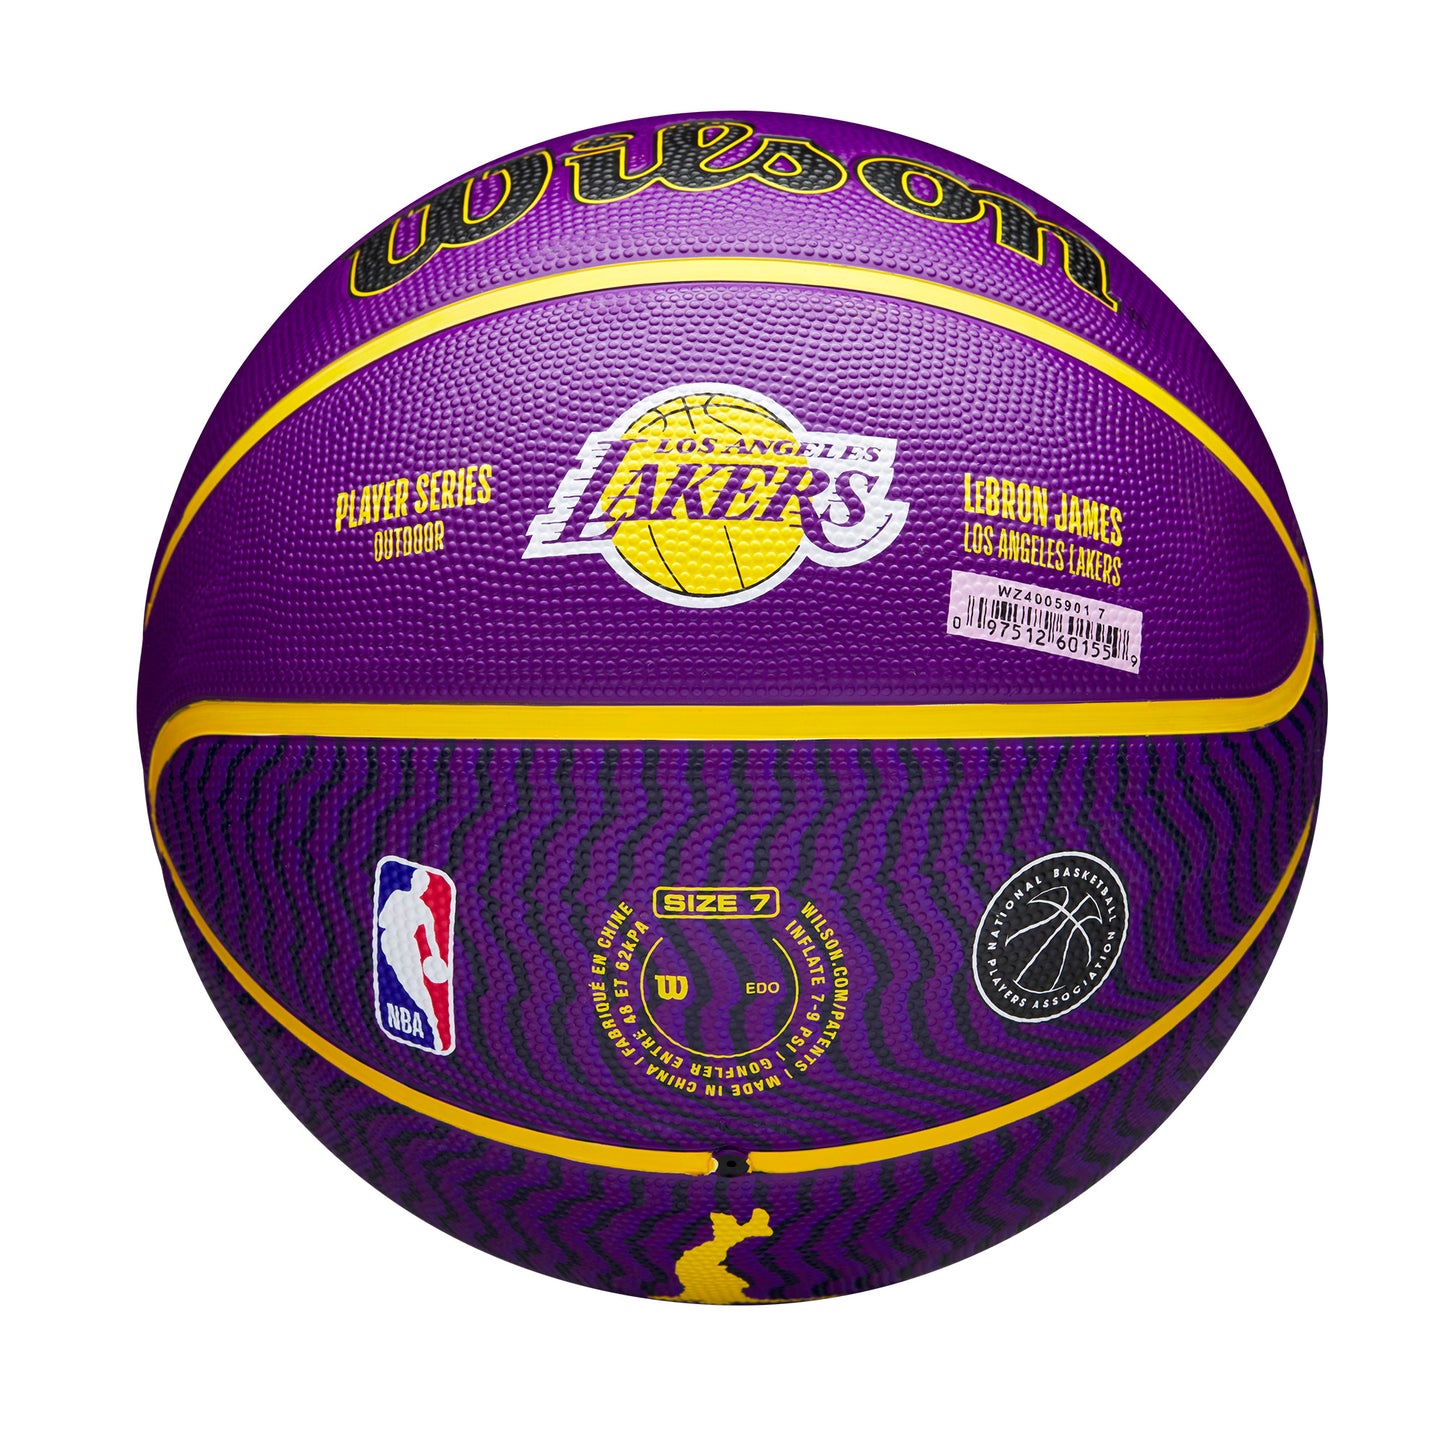 Wilson NBA PLAYER ICON OUTDOOR BASKETBALL LEBRON Purple WZ4005901XB